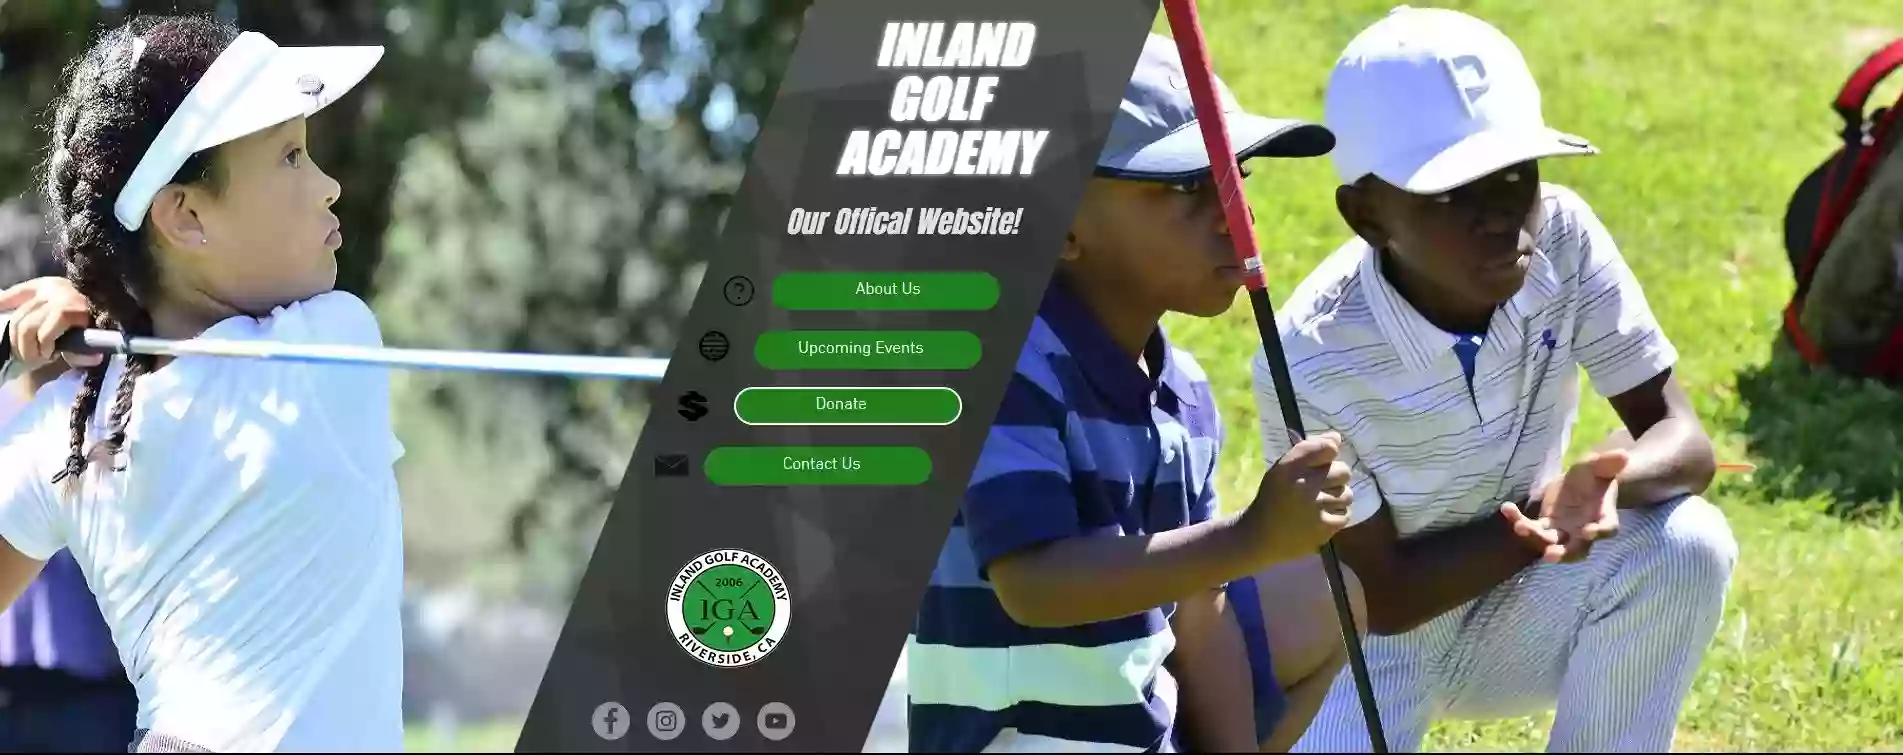 Inland Golf Academy